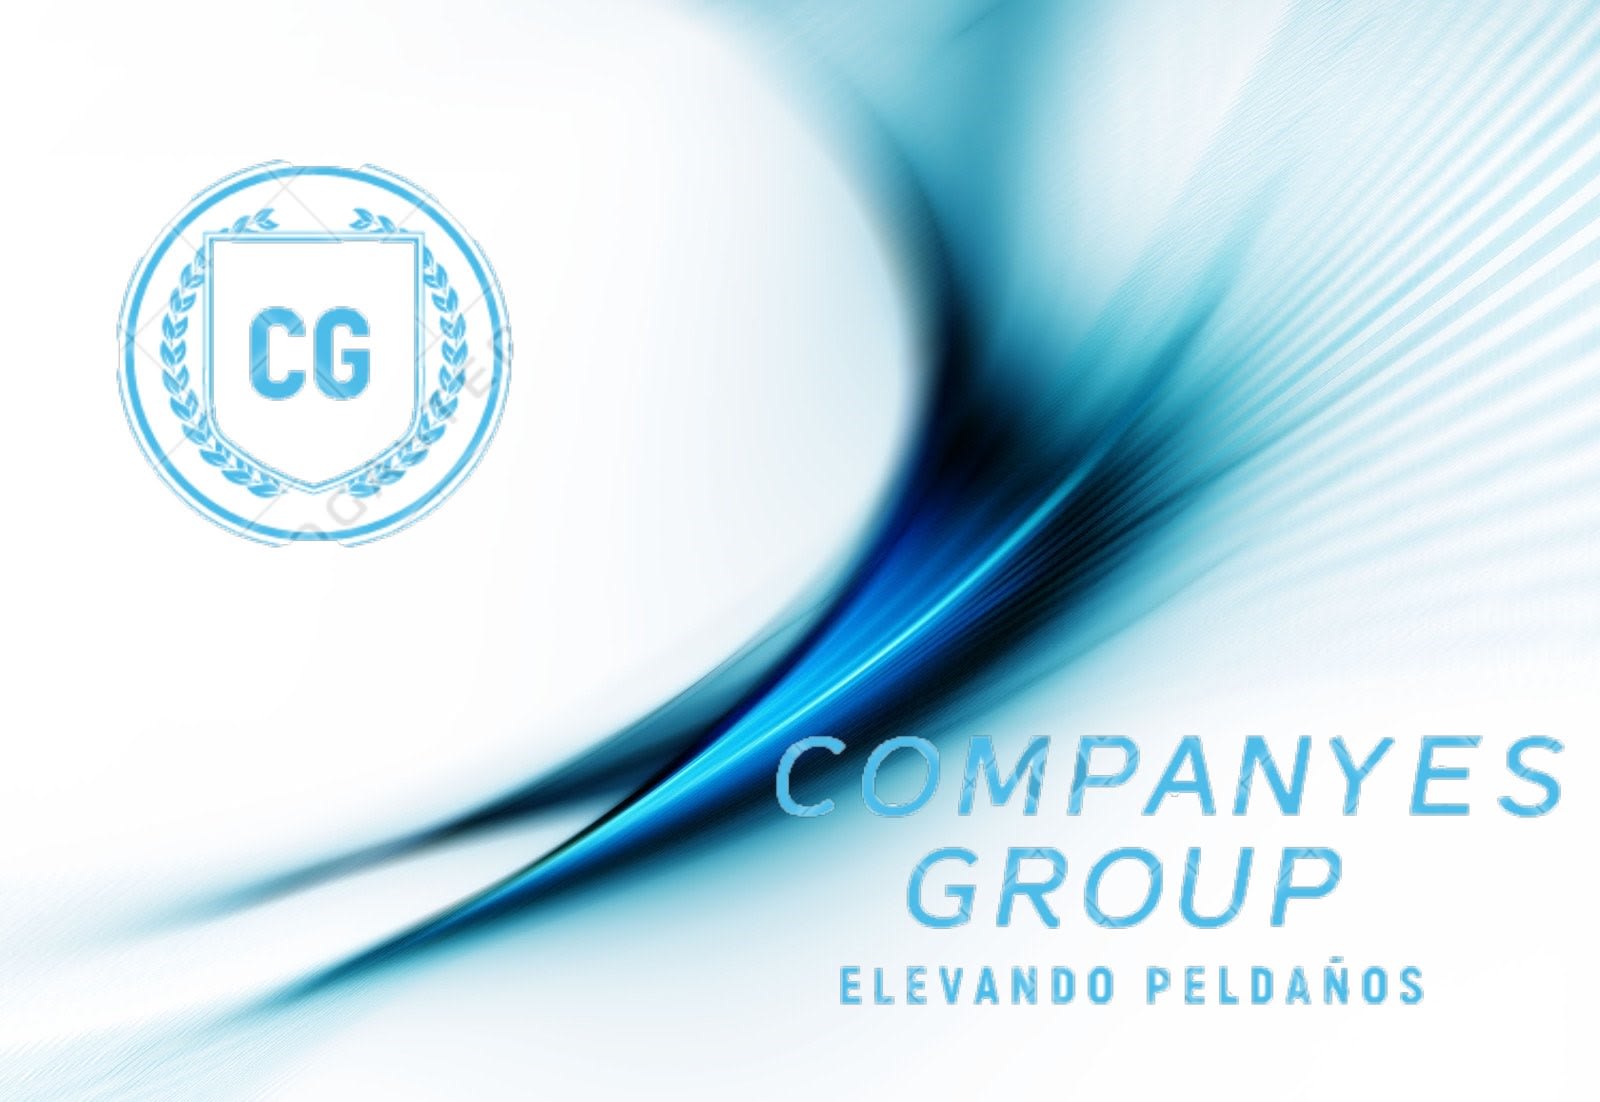 Companyes Group